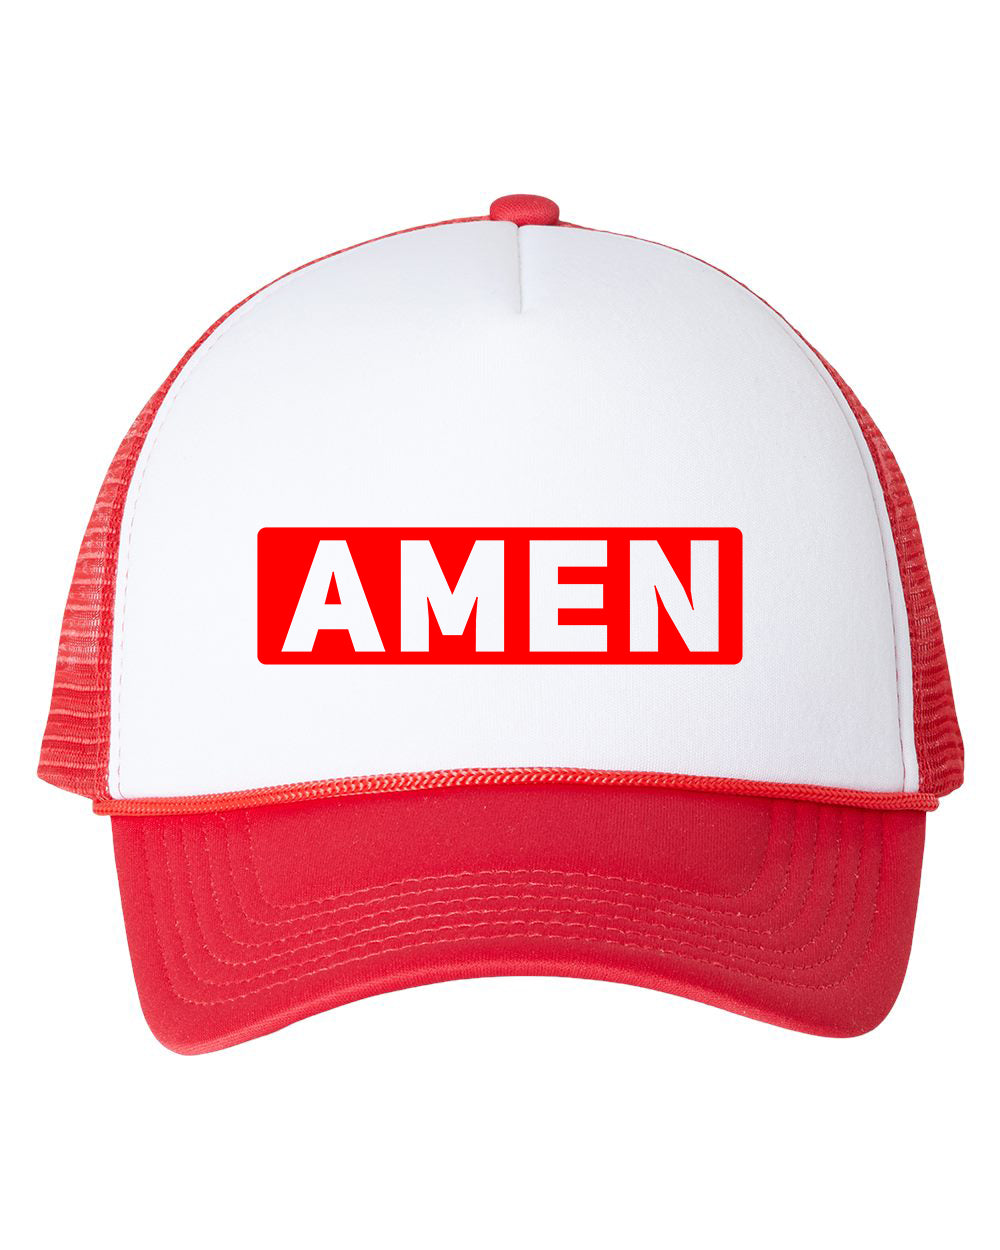 Amen Christian Trucker Hat Cap